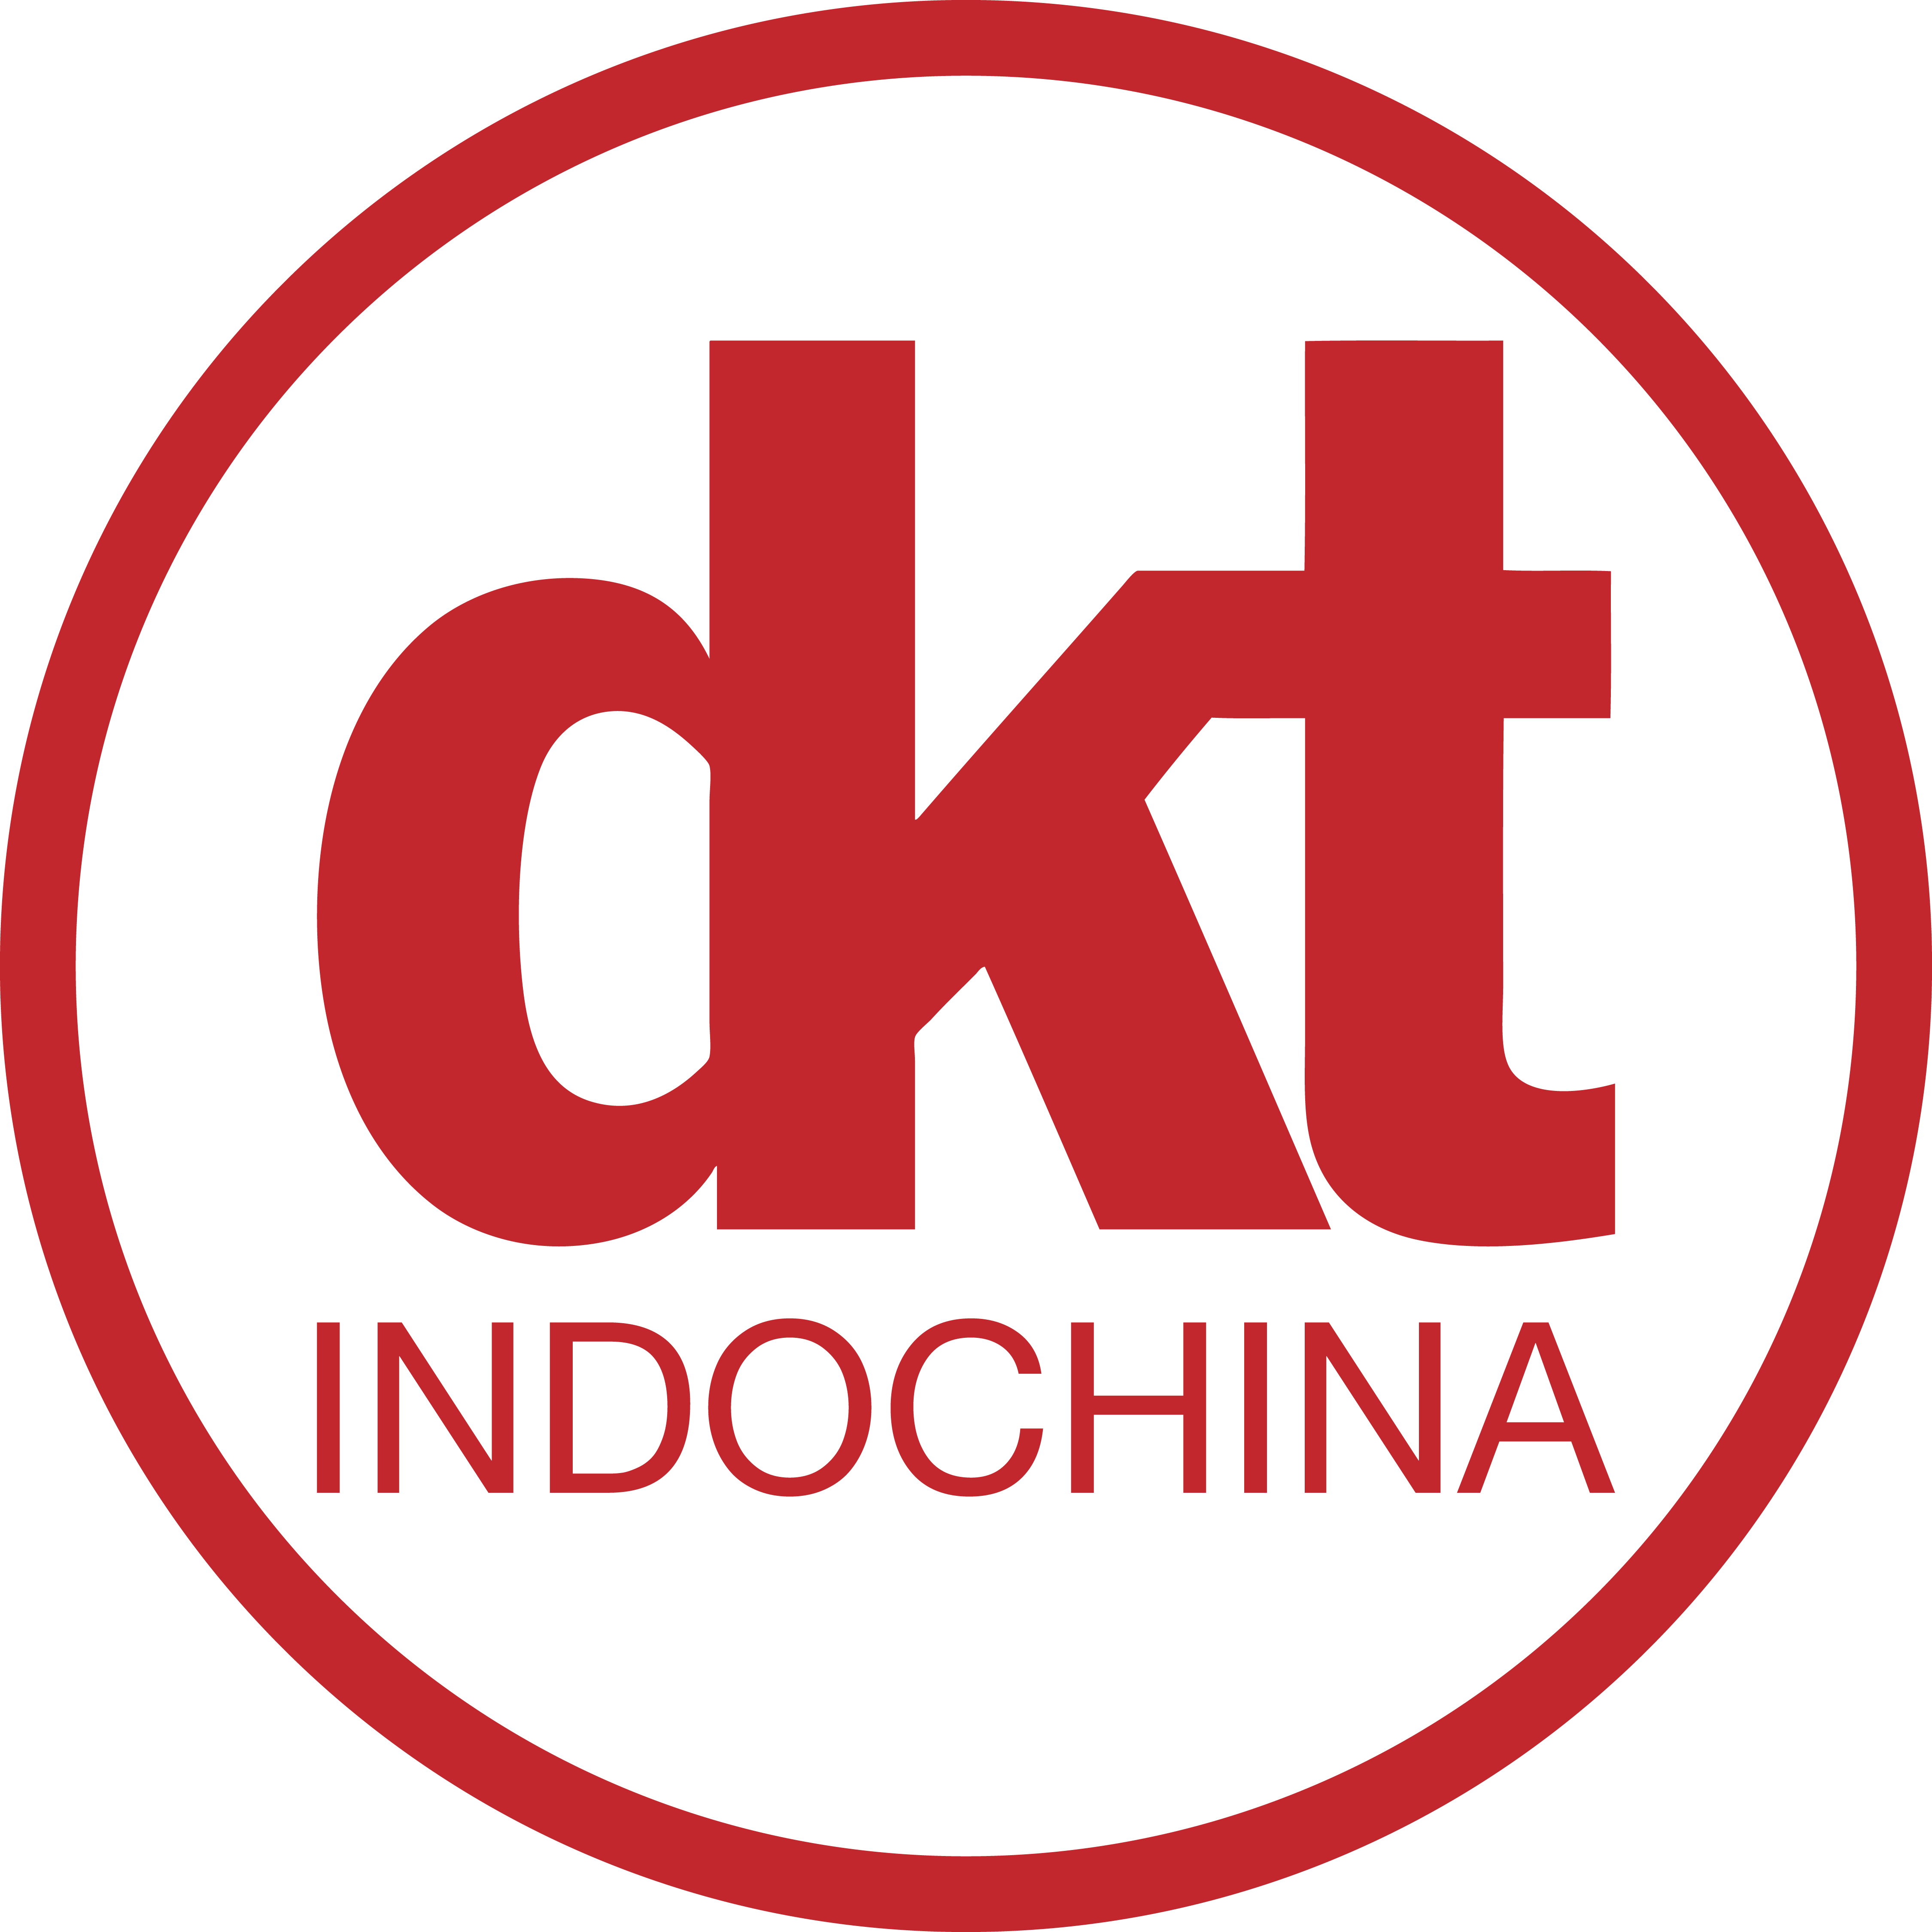 DKT indochina-01